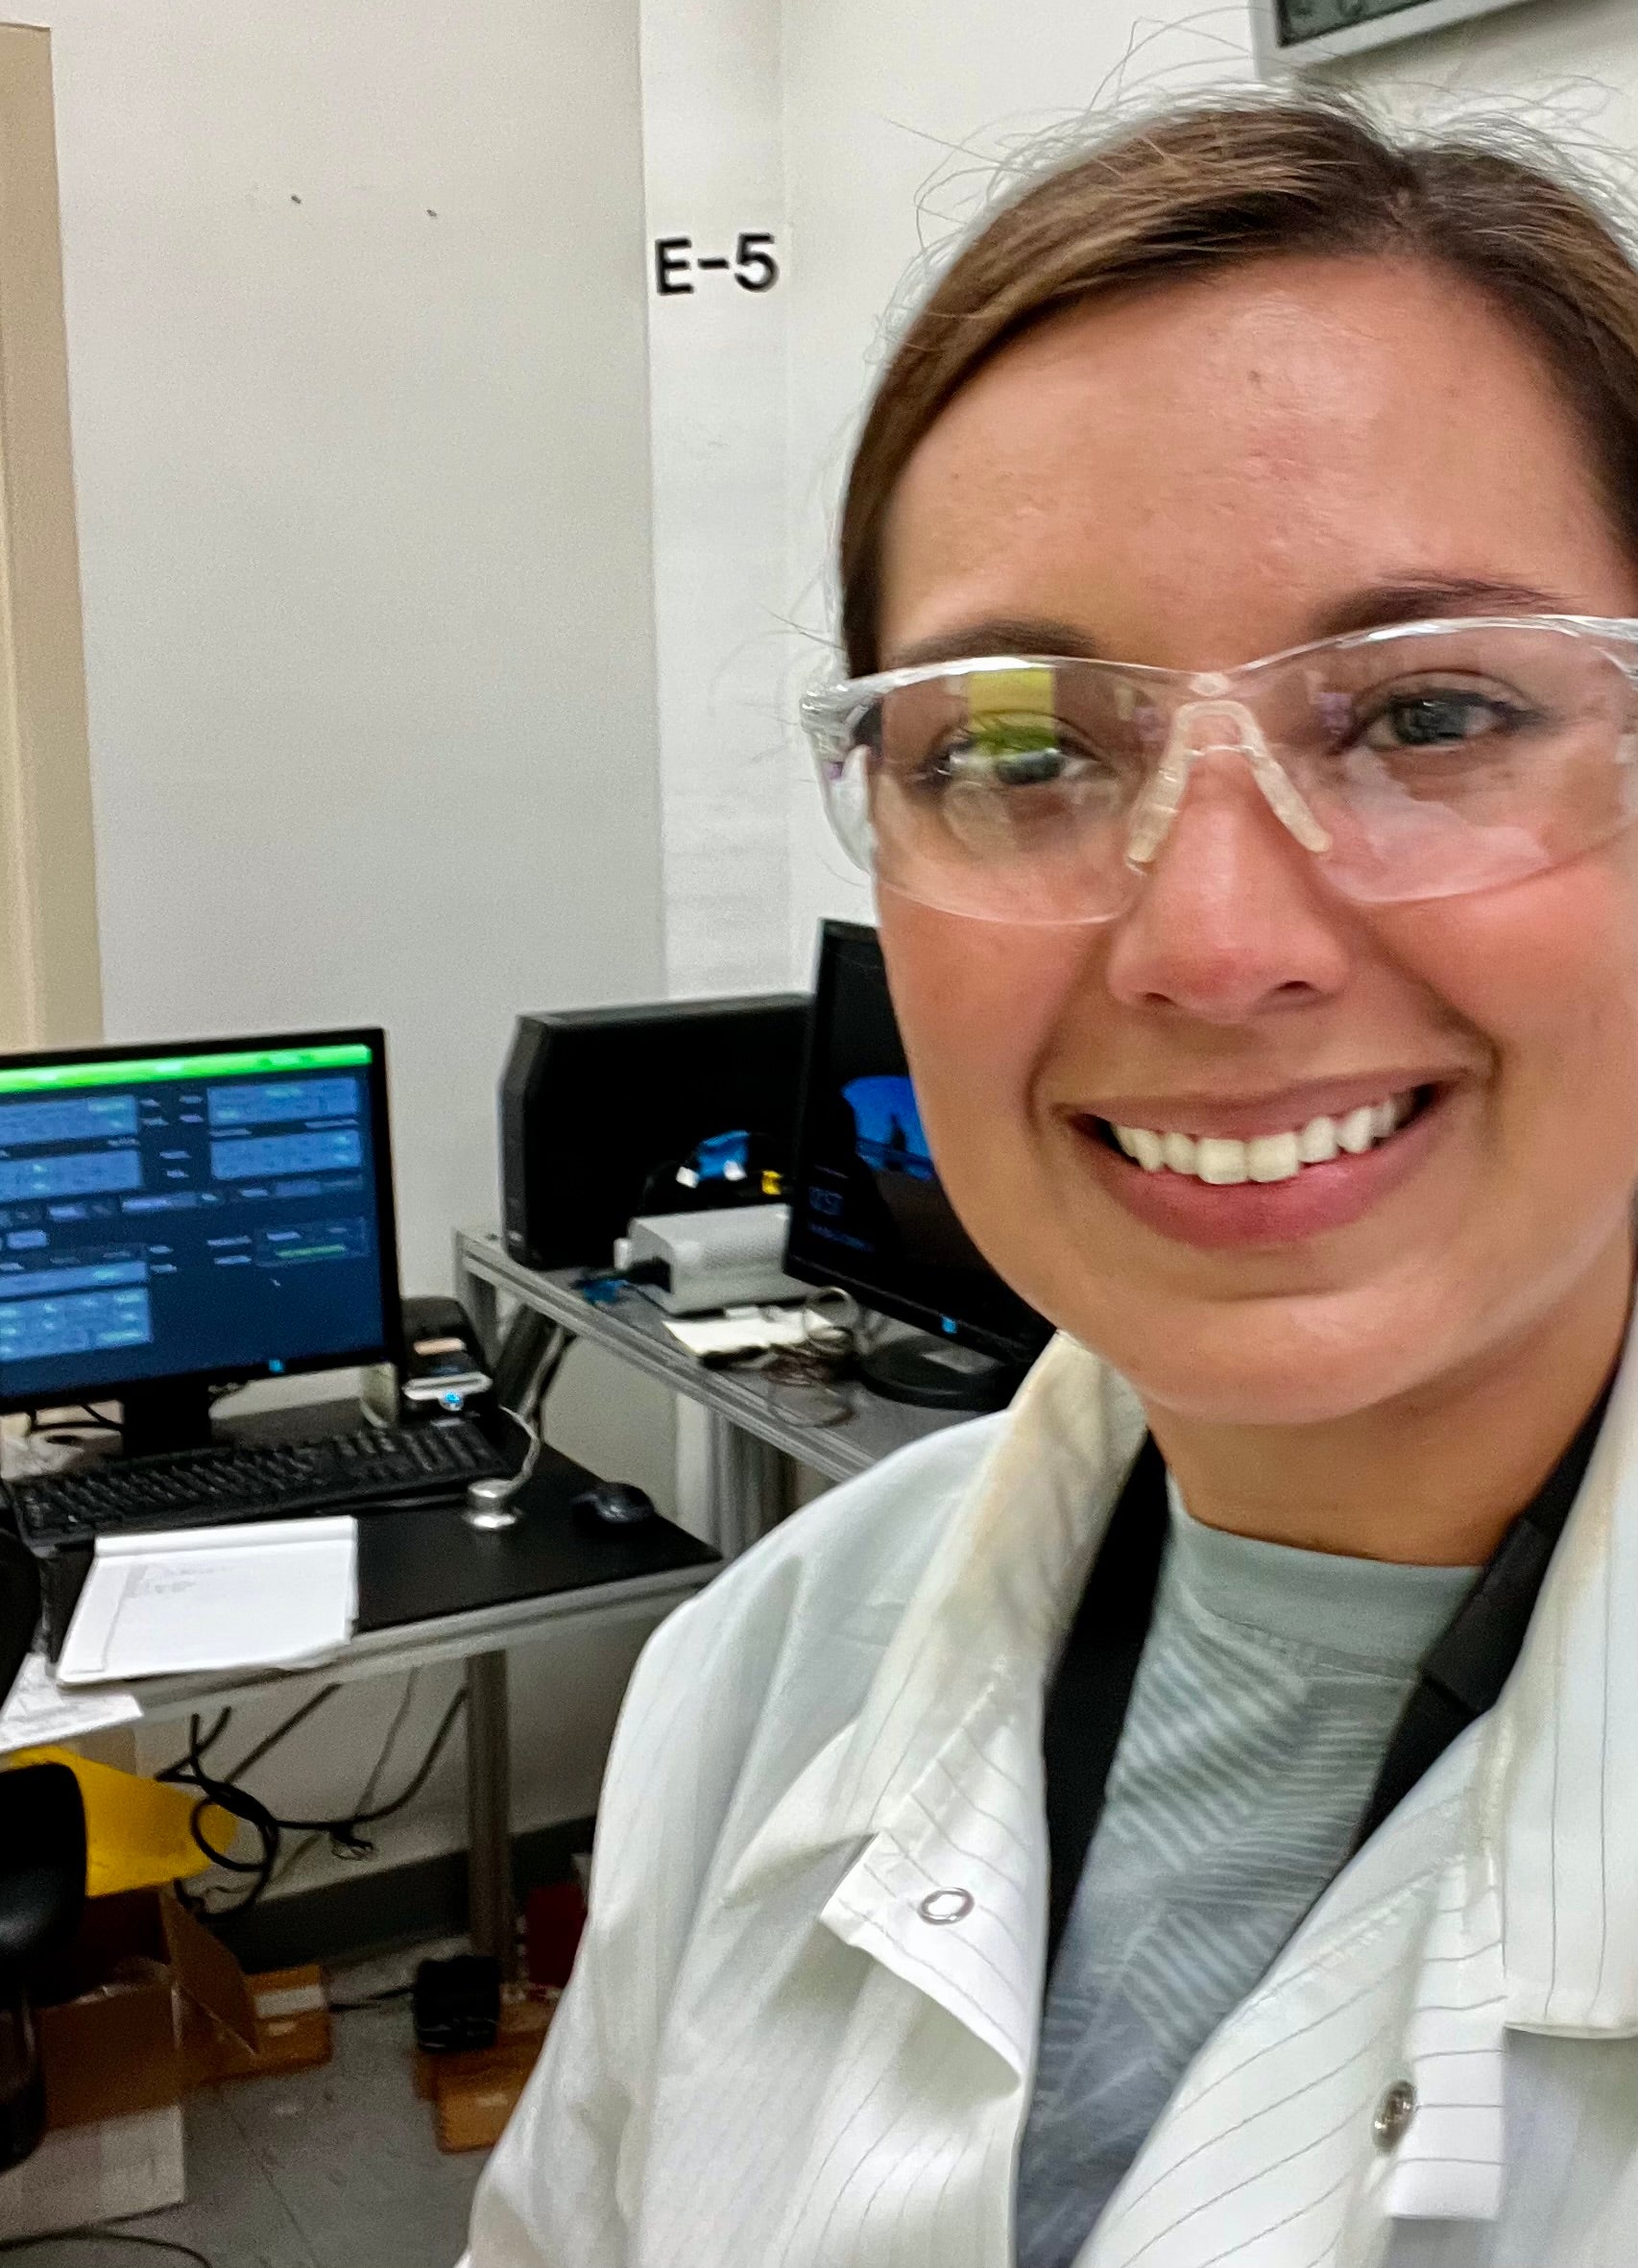 Addie during her internship at Oak Ridge National Laboratory